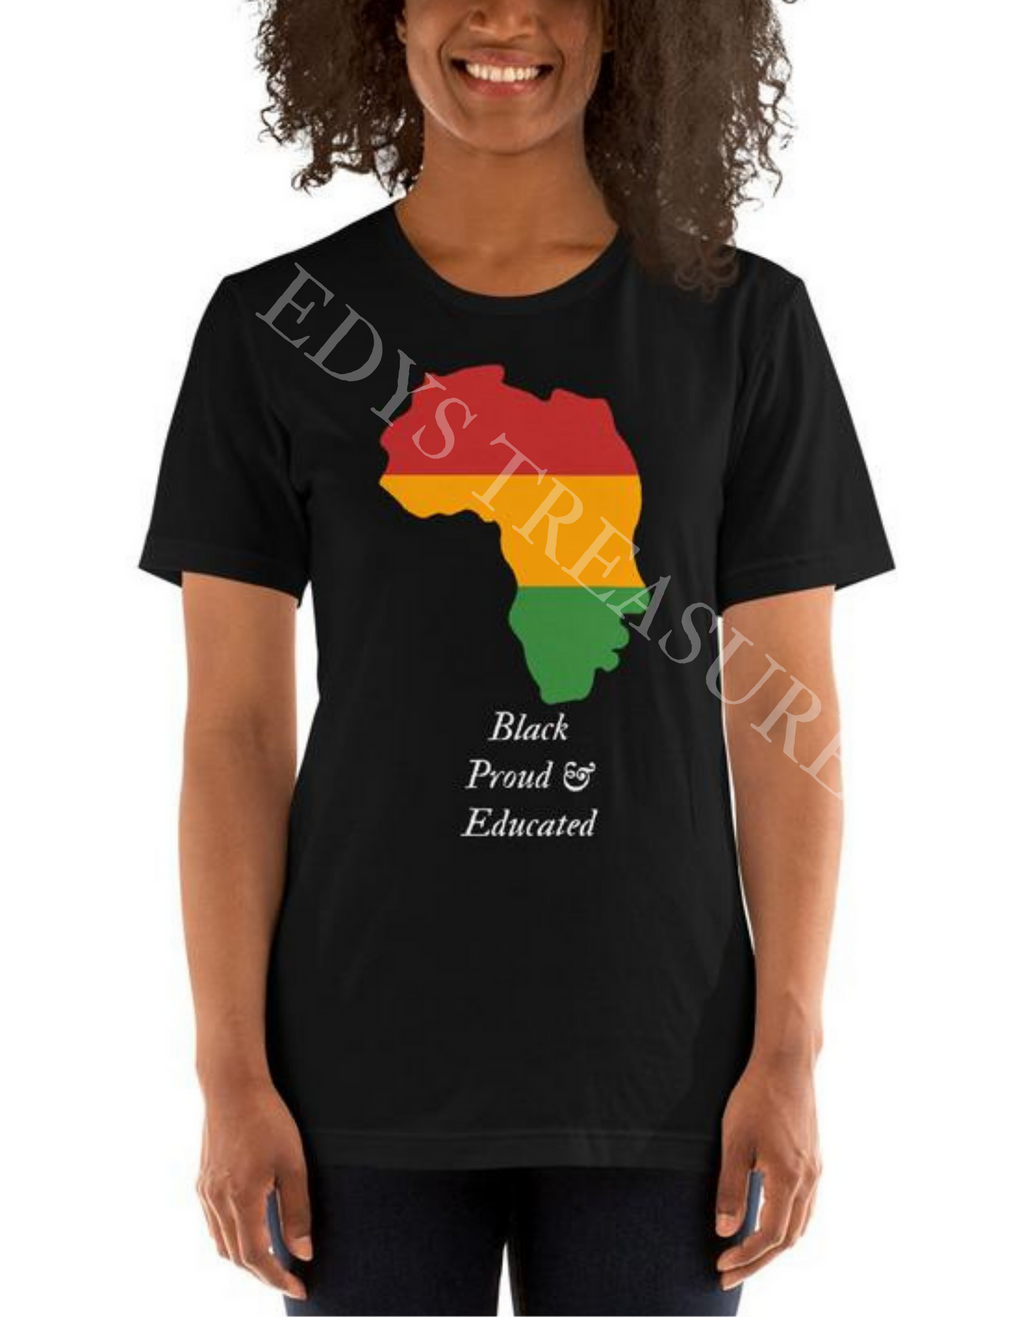 Black Proud & Educated Short-Sleeve Unisex T-Shirt - Edy's Treasures